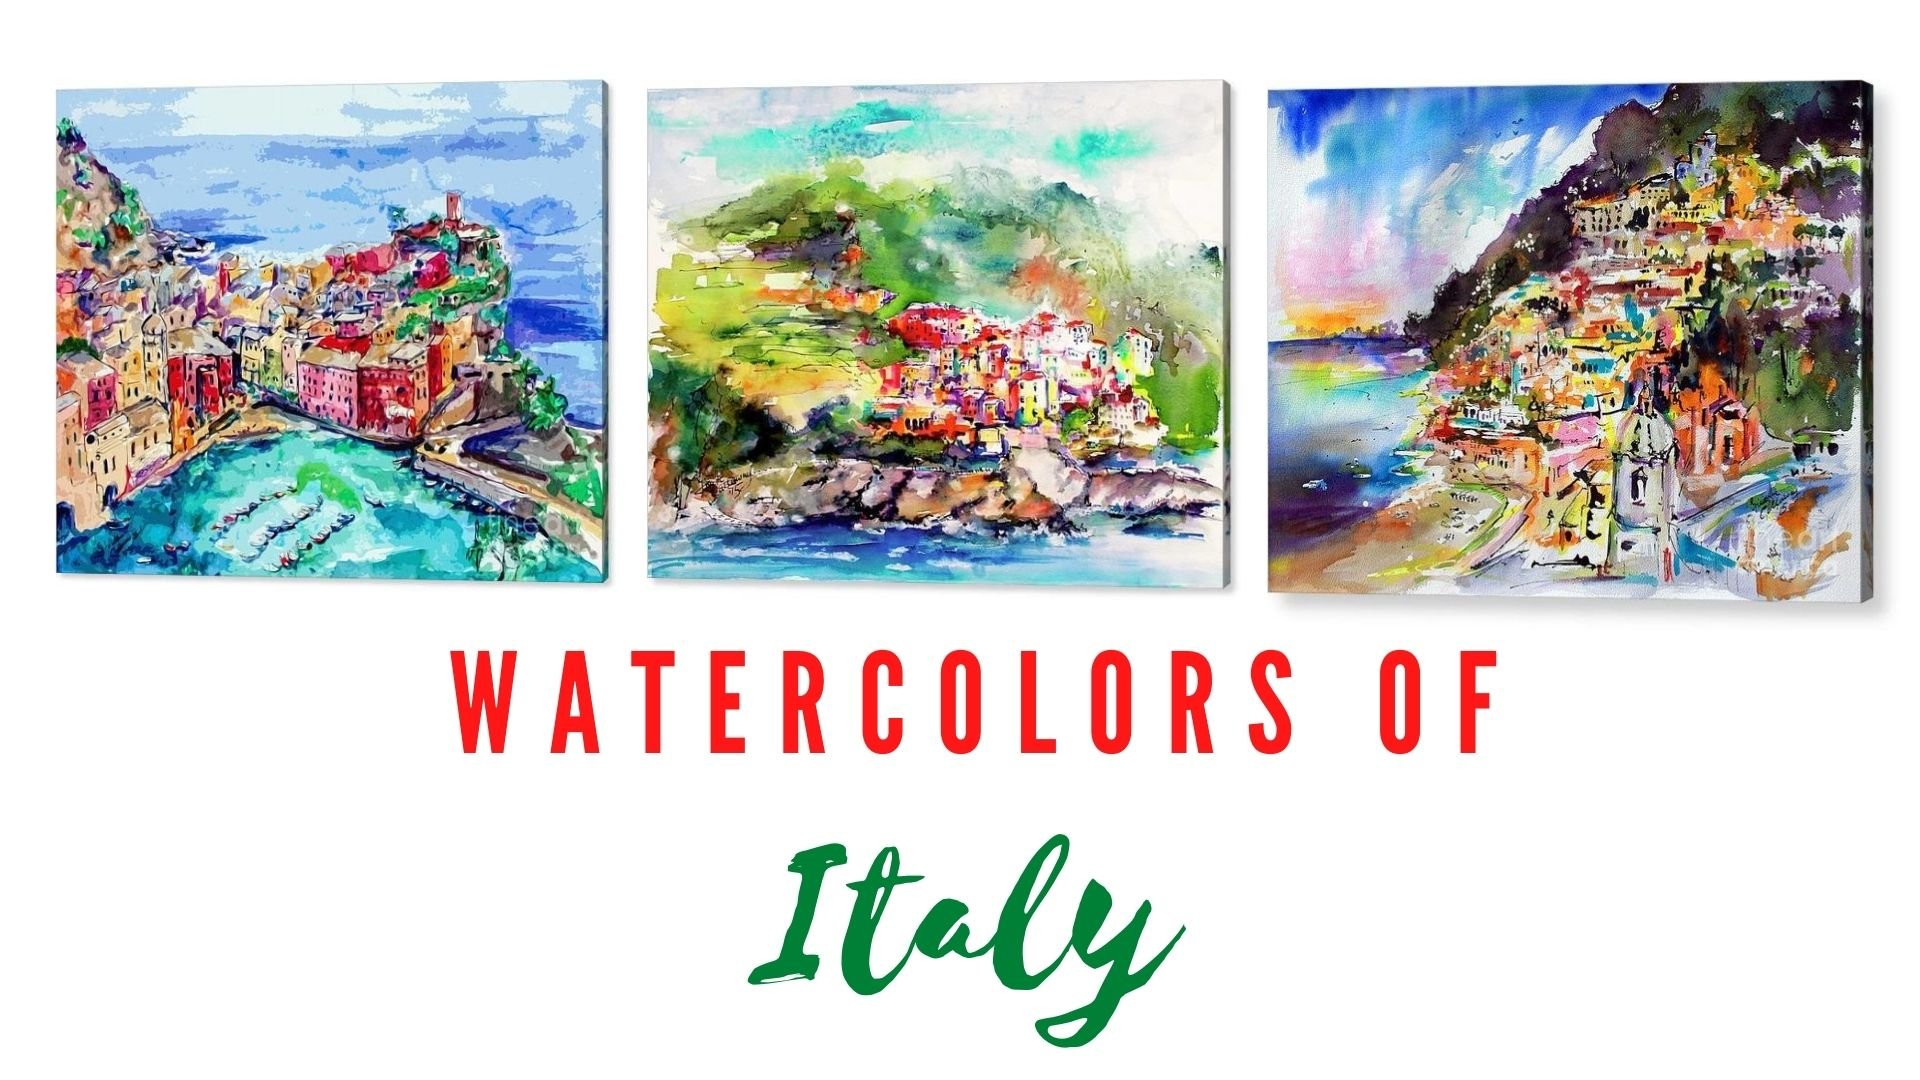 Watercolors of Italy positano